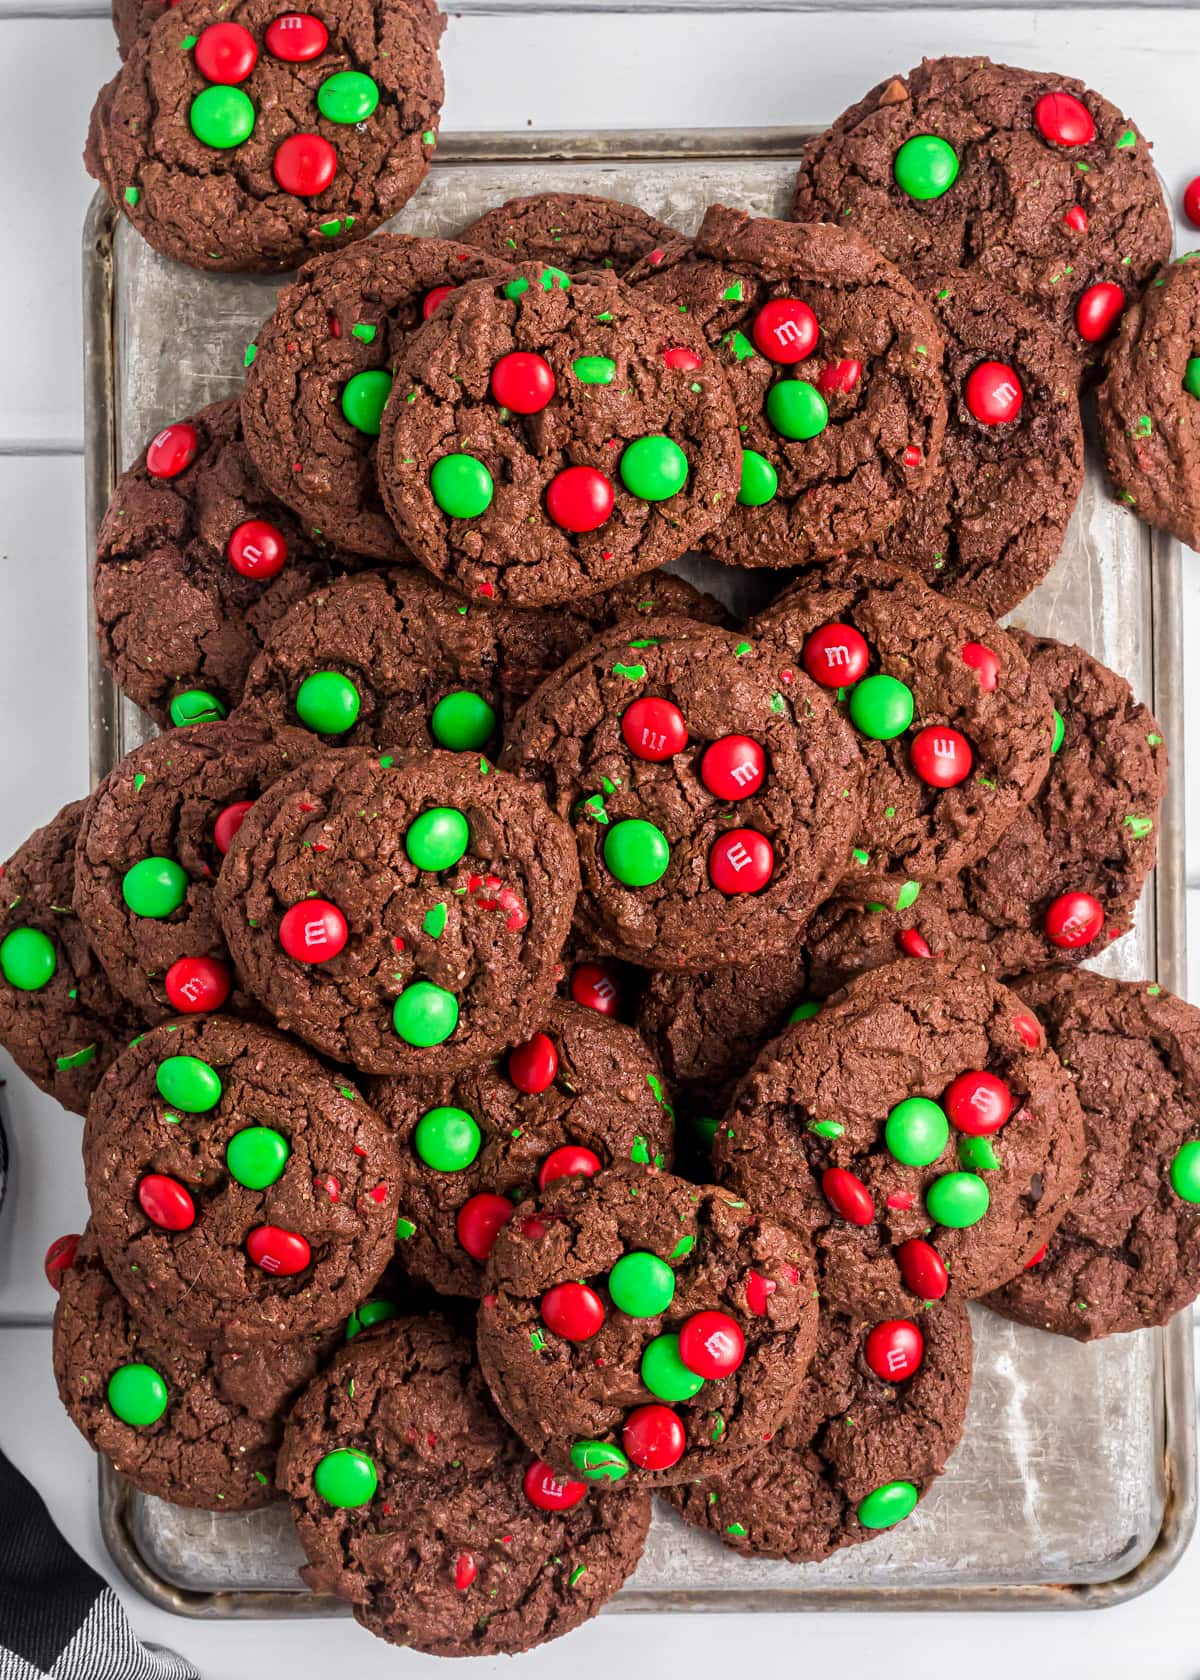 Pile of baked chocolate christmas cookies.